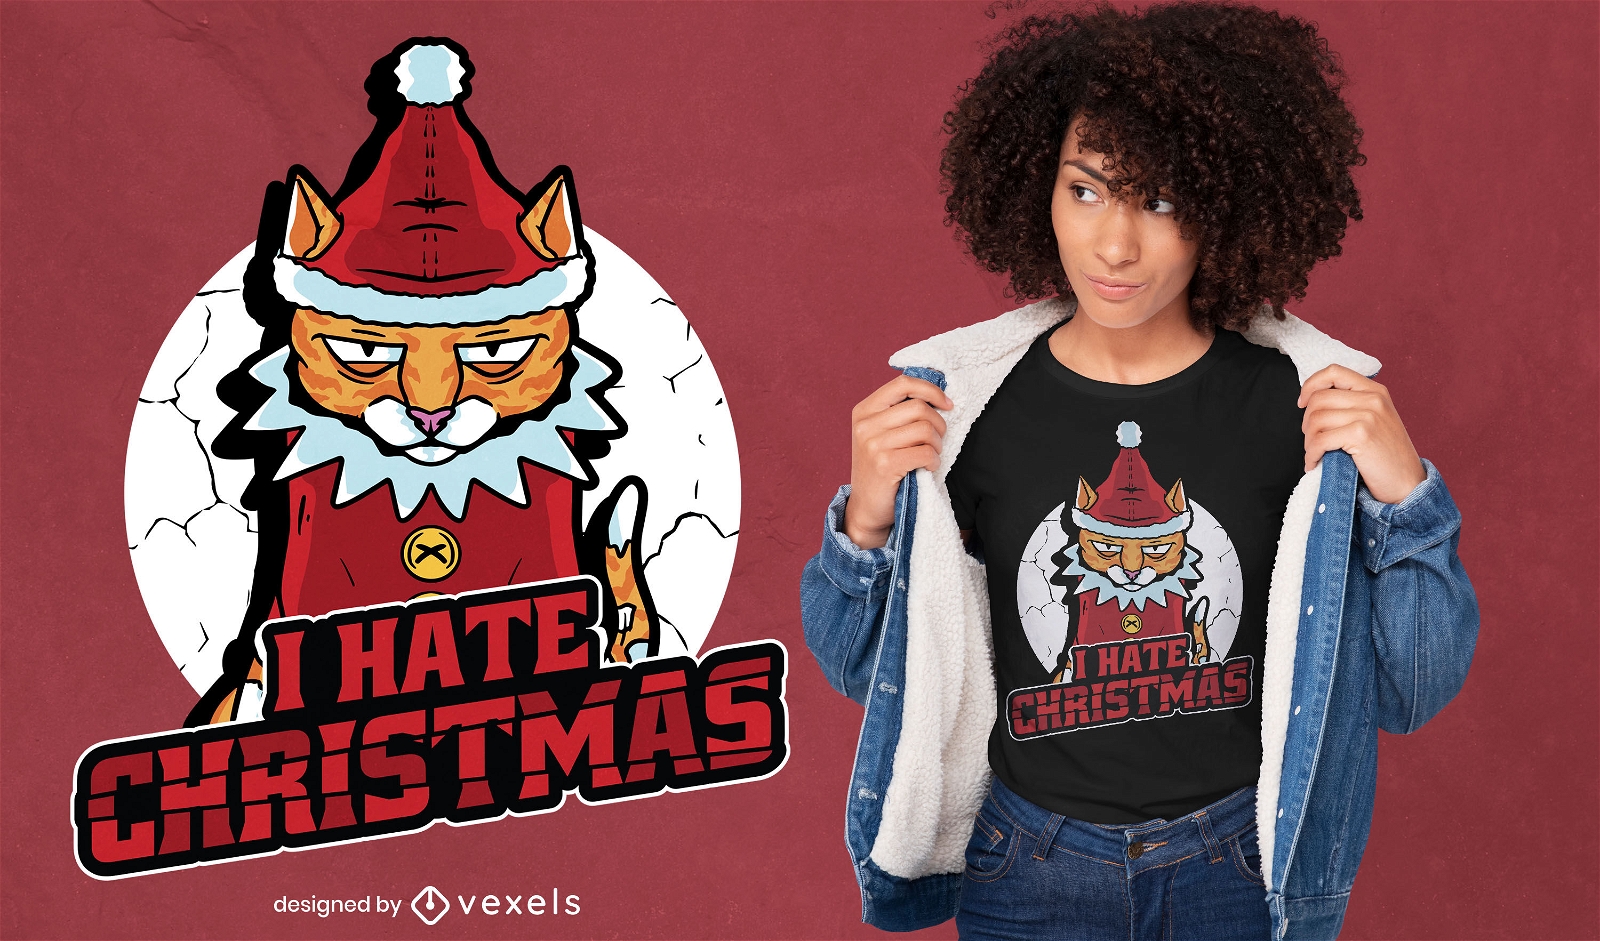 Cool anti-Christmas cat t-shirt design